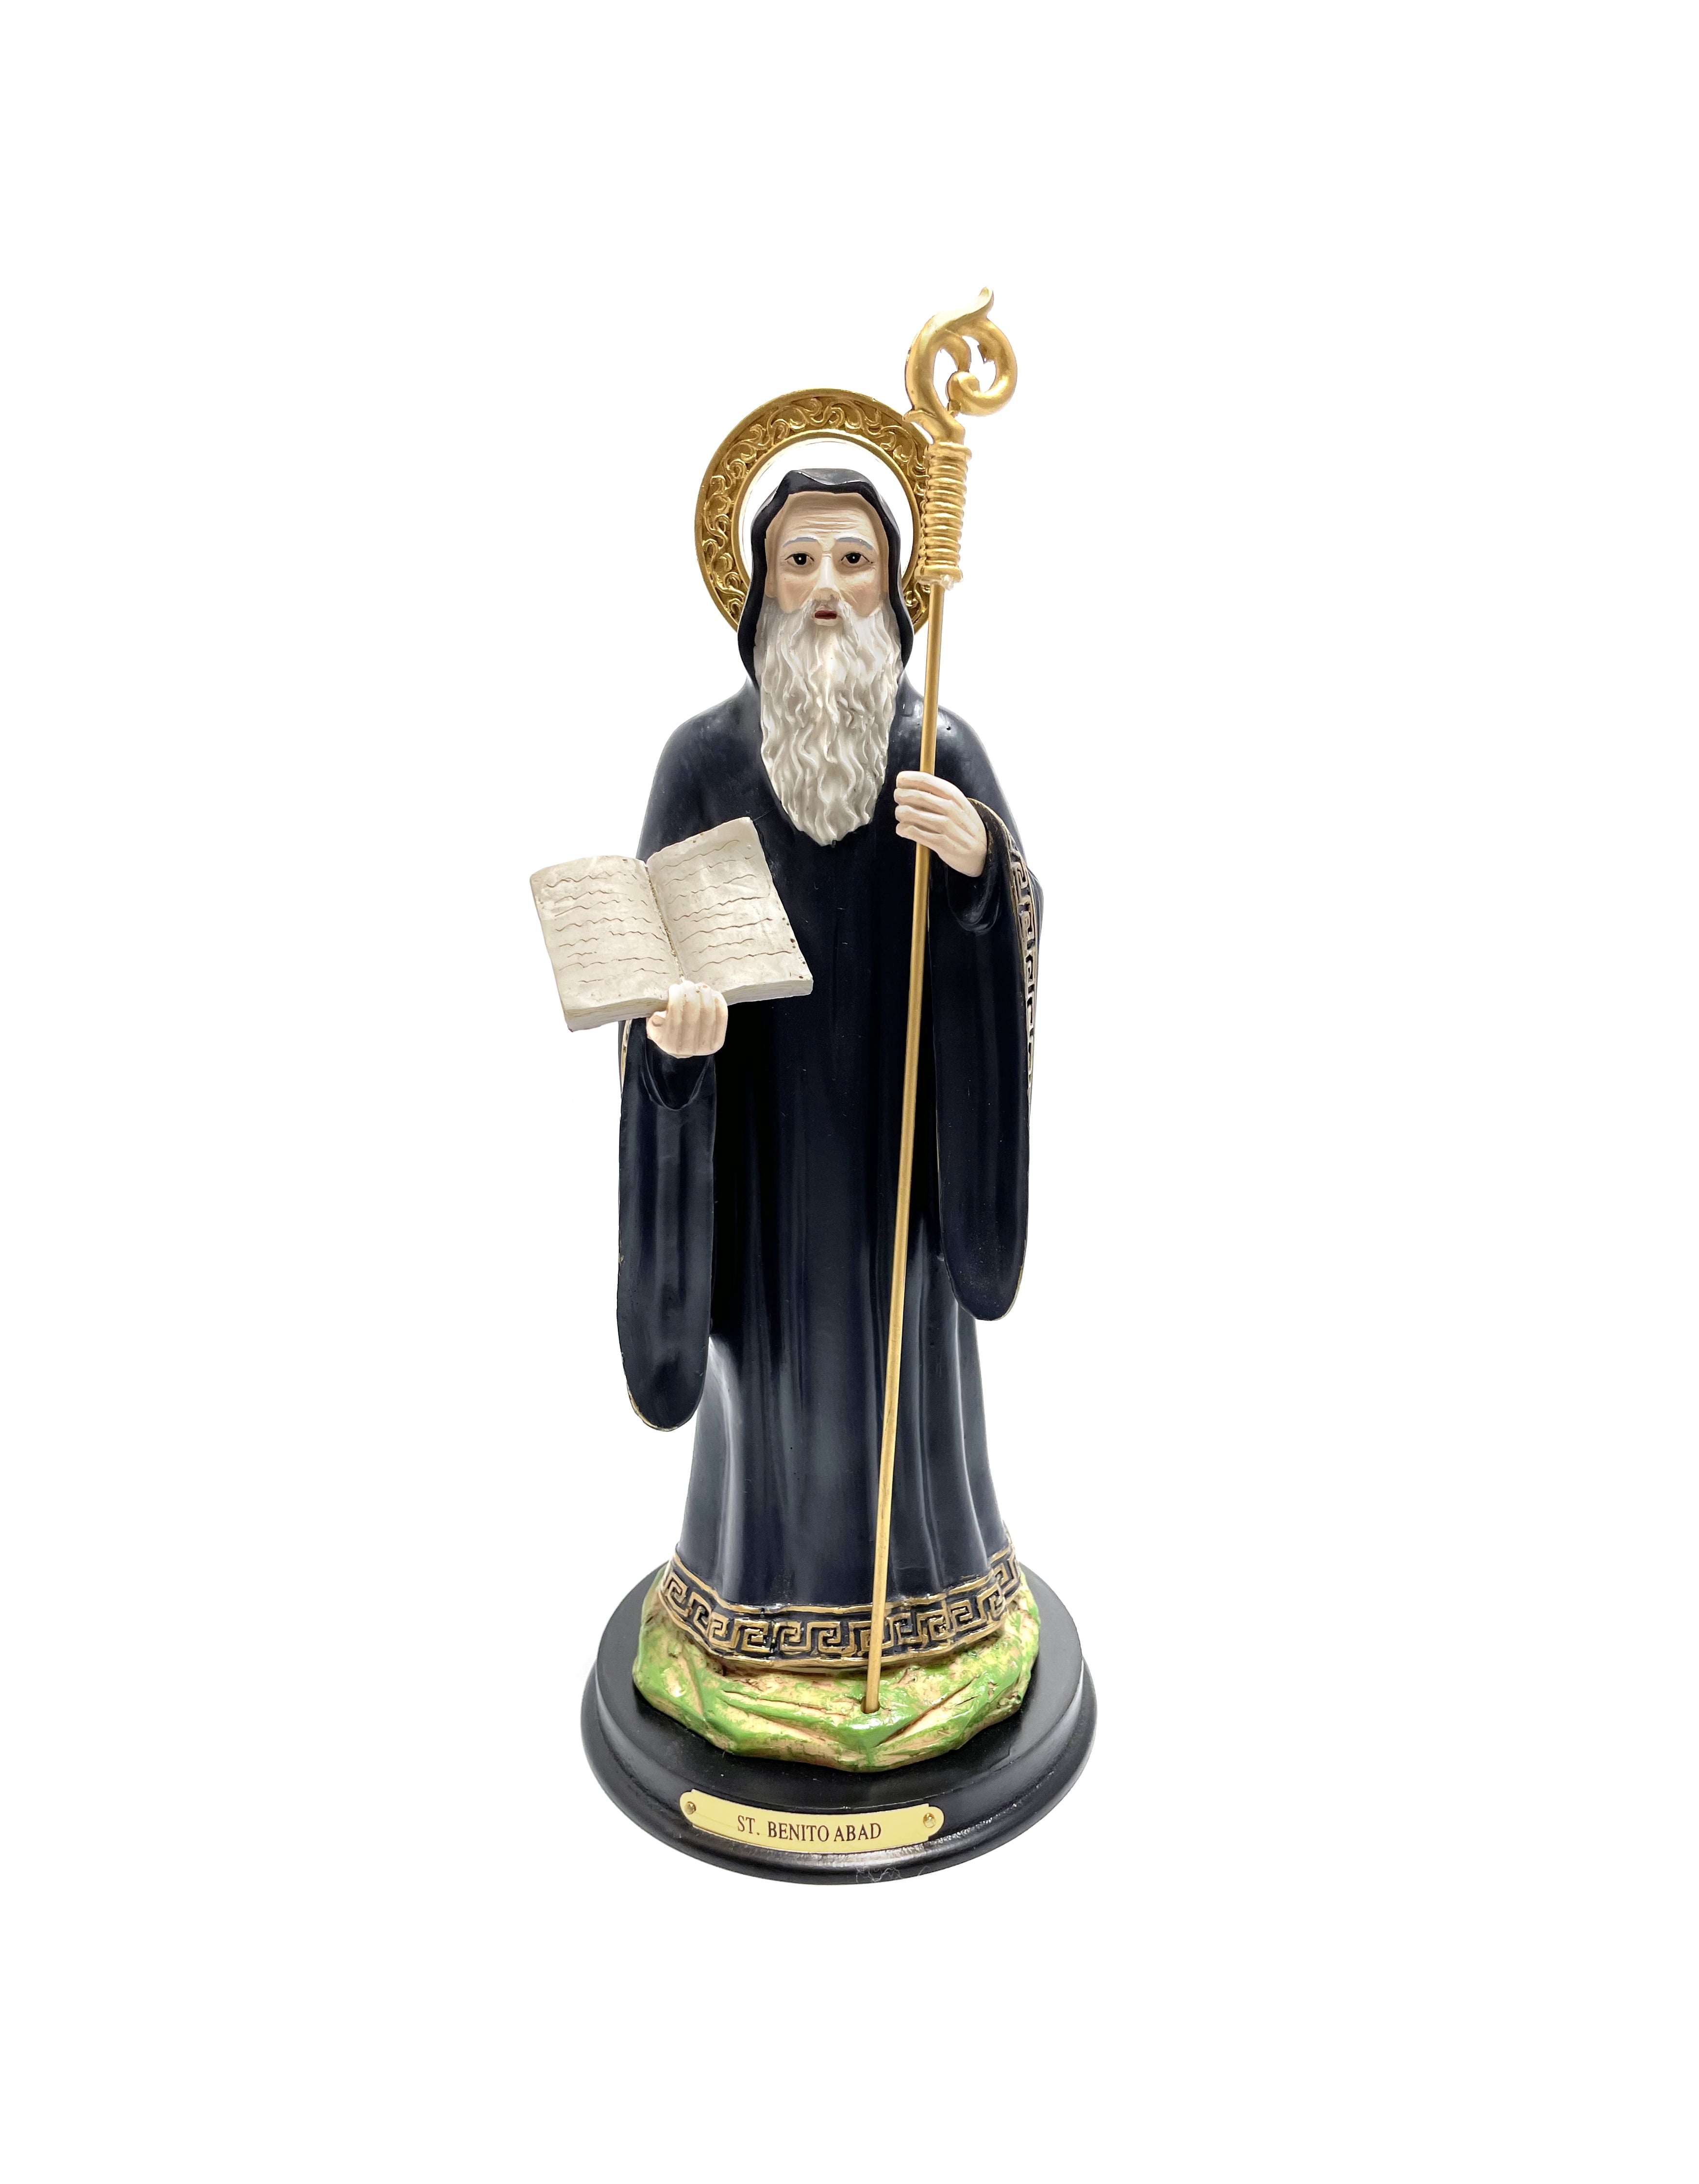 Religious statue of Saint Benedict 12" height